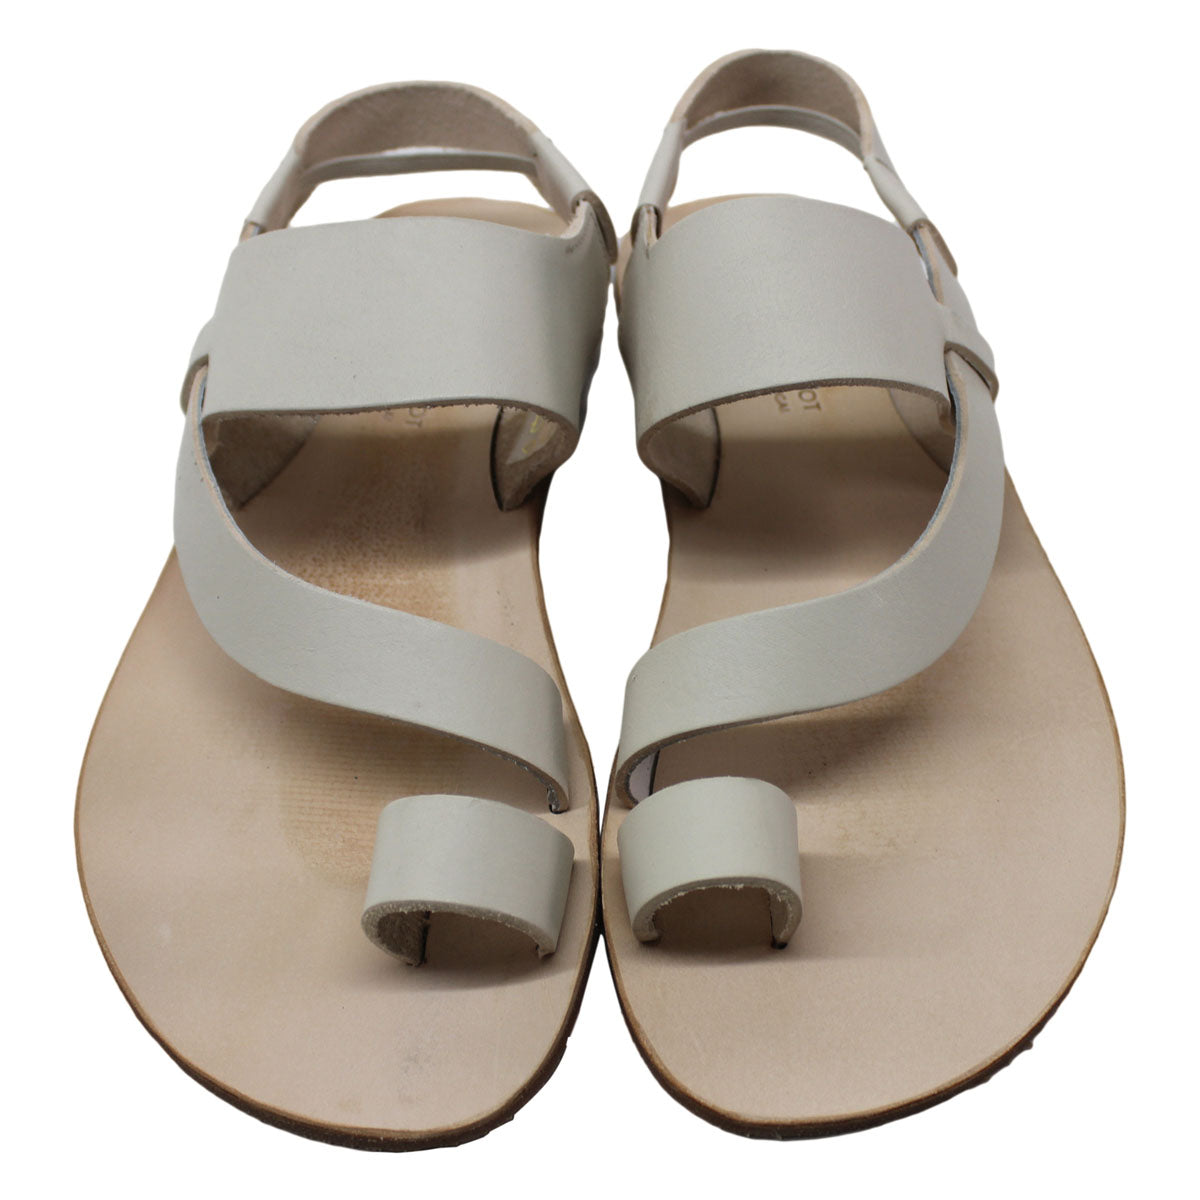 Vivobarefoot Womens Opanka 203225 Leather Sandals - UK 6